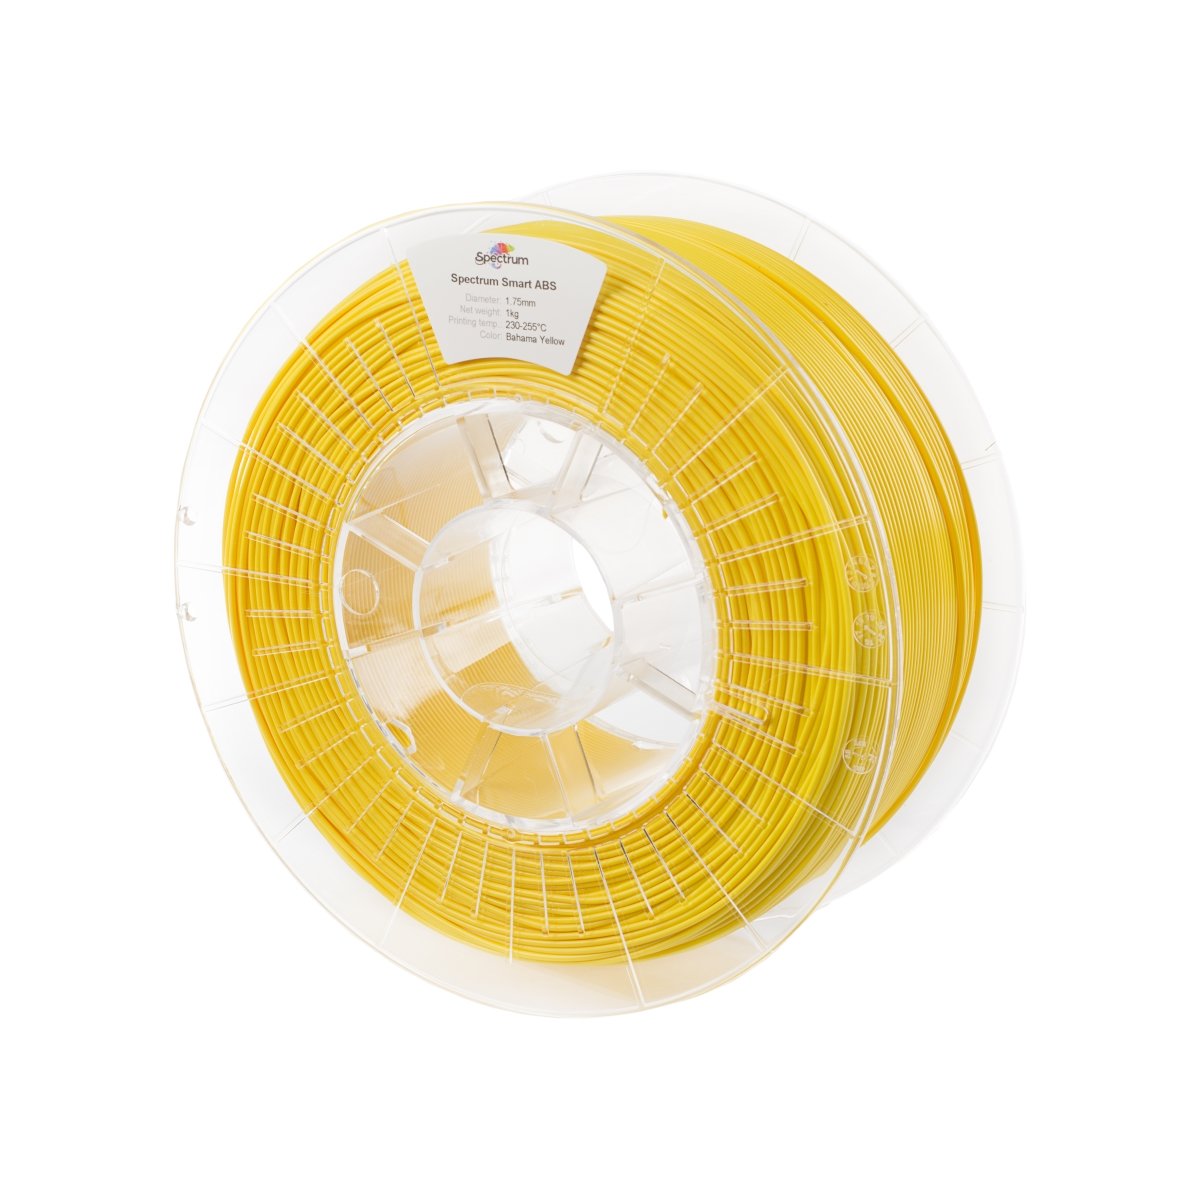 Køb Spectrum Filaments - Smart ABS - 1.75mm - Bahama Yellow - 1 kg 3d printer - Pris 180.00 kr.